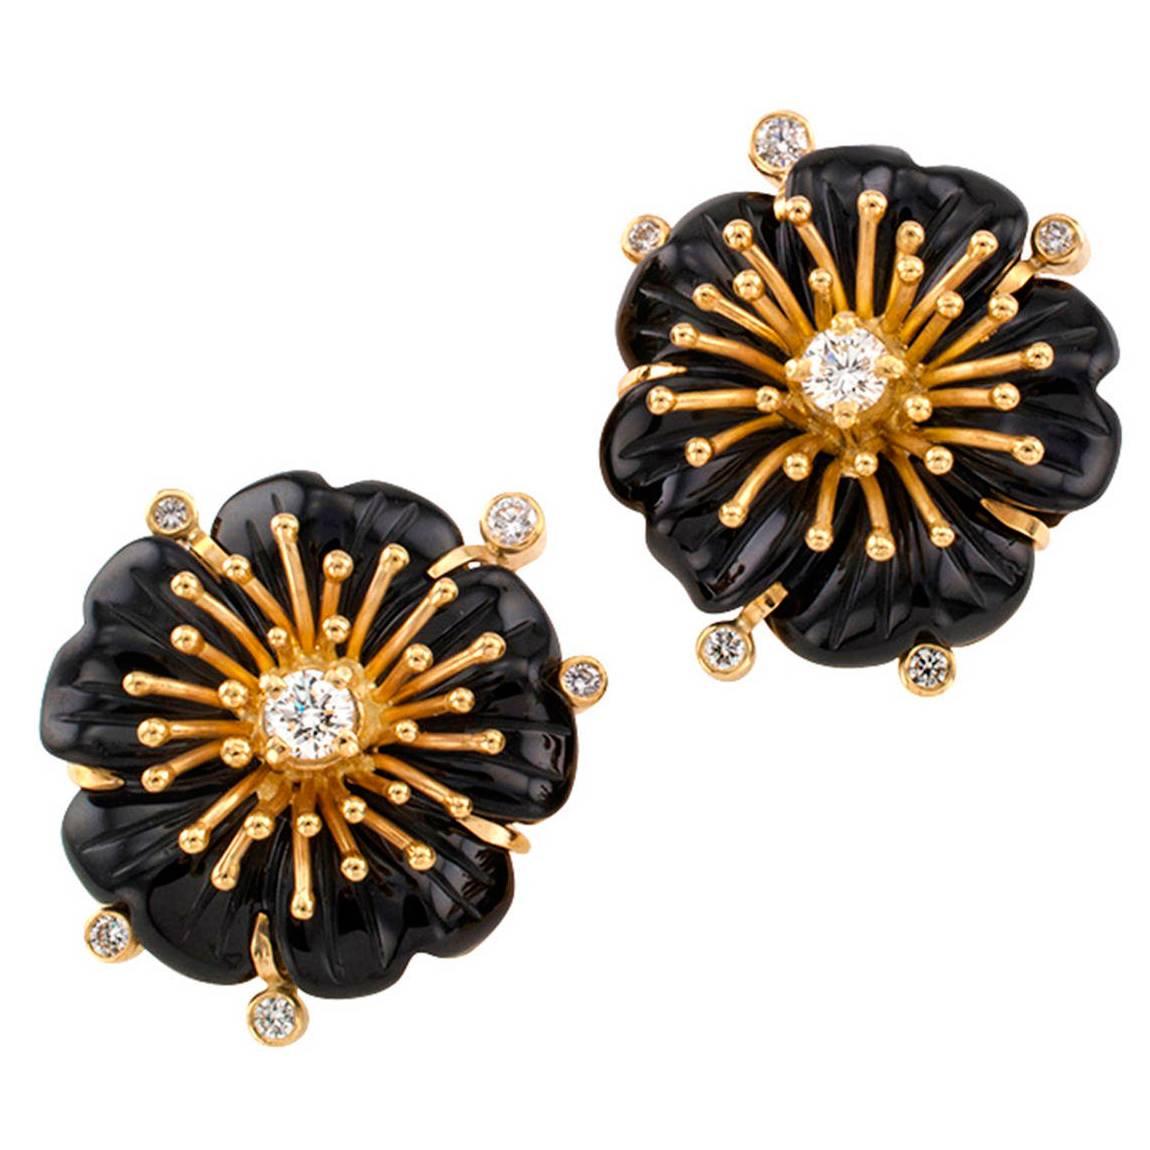 Carved Black Onyx And Diamond Flower Earrings